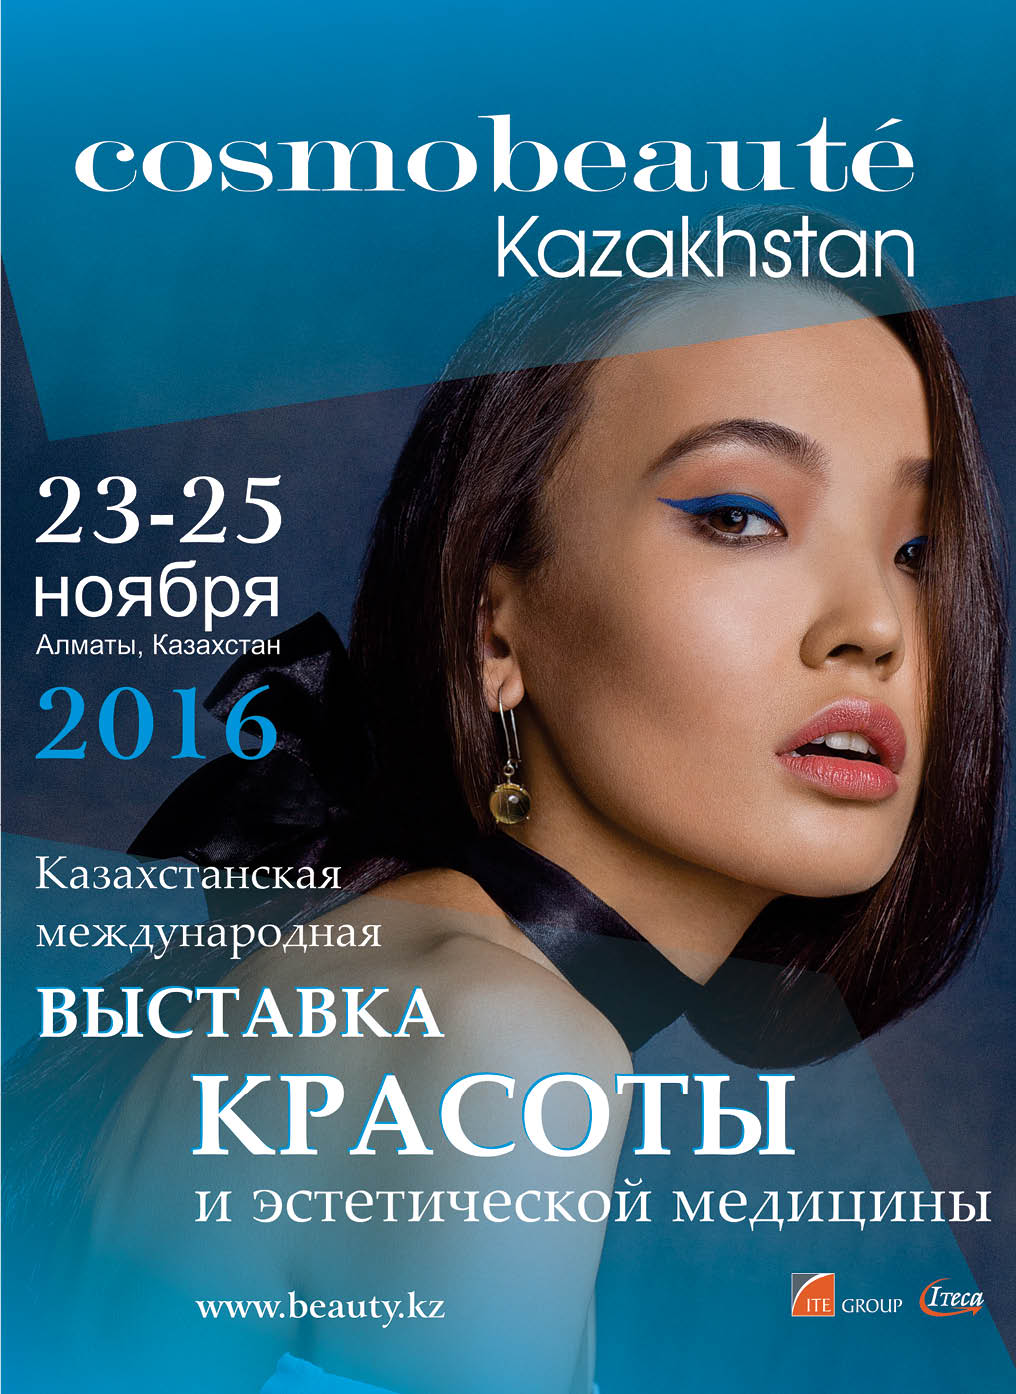 Cosmobeaute Kazakhstan 2016 – 3 дня ярких beauty-событий в Алматы 